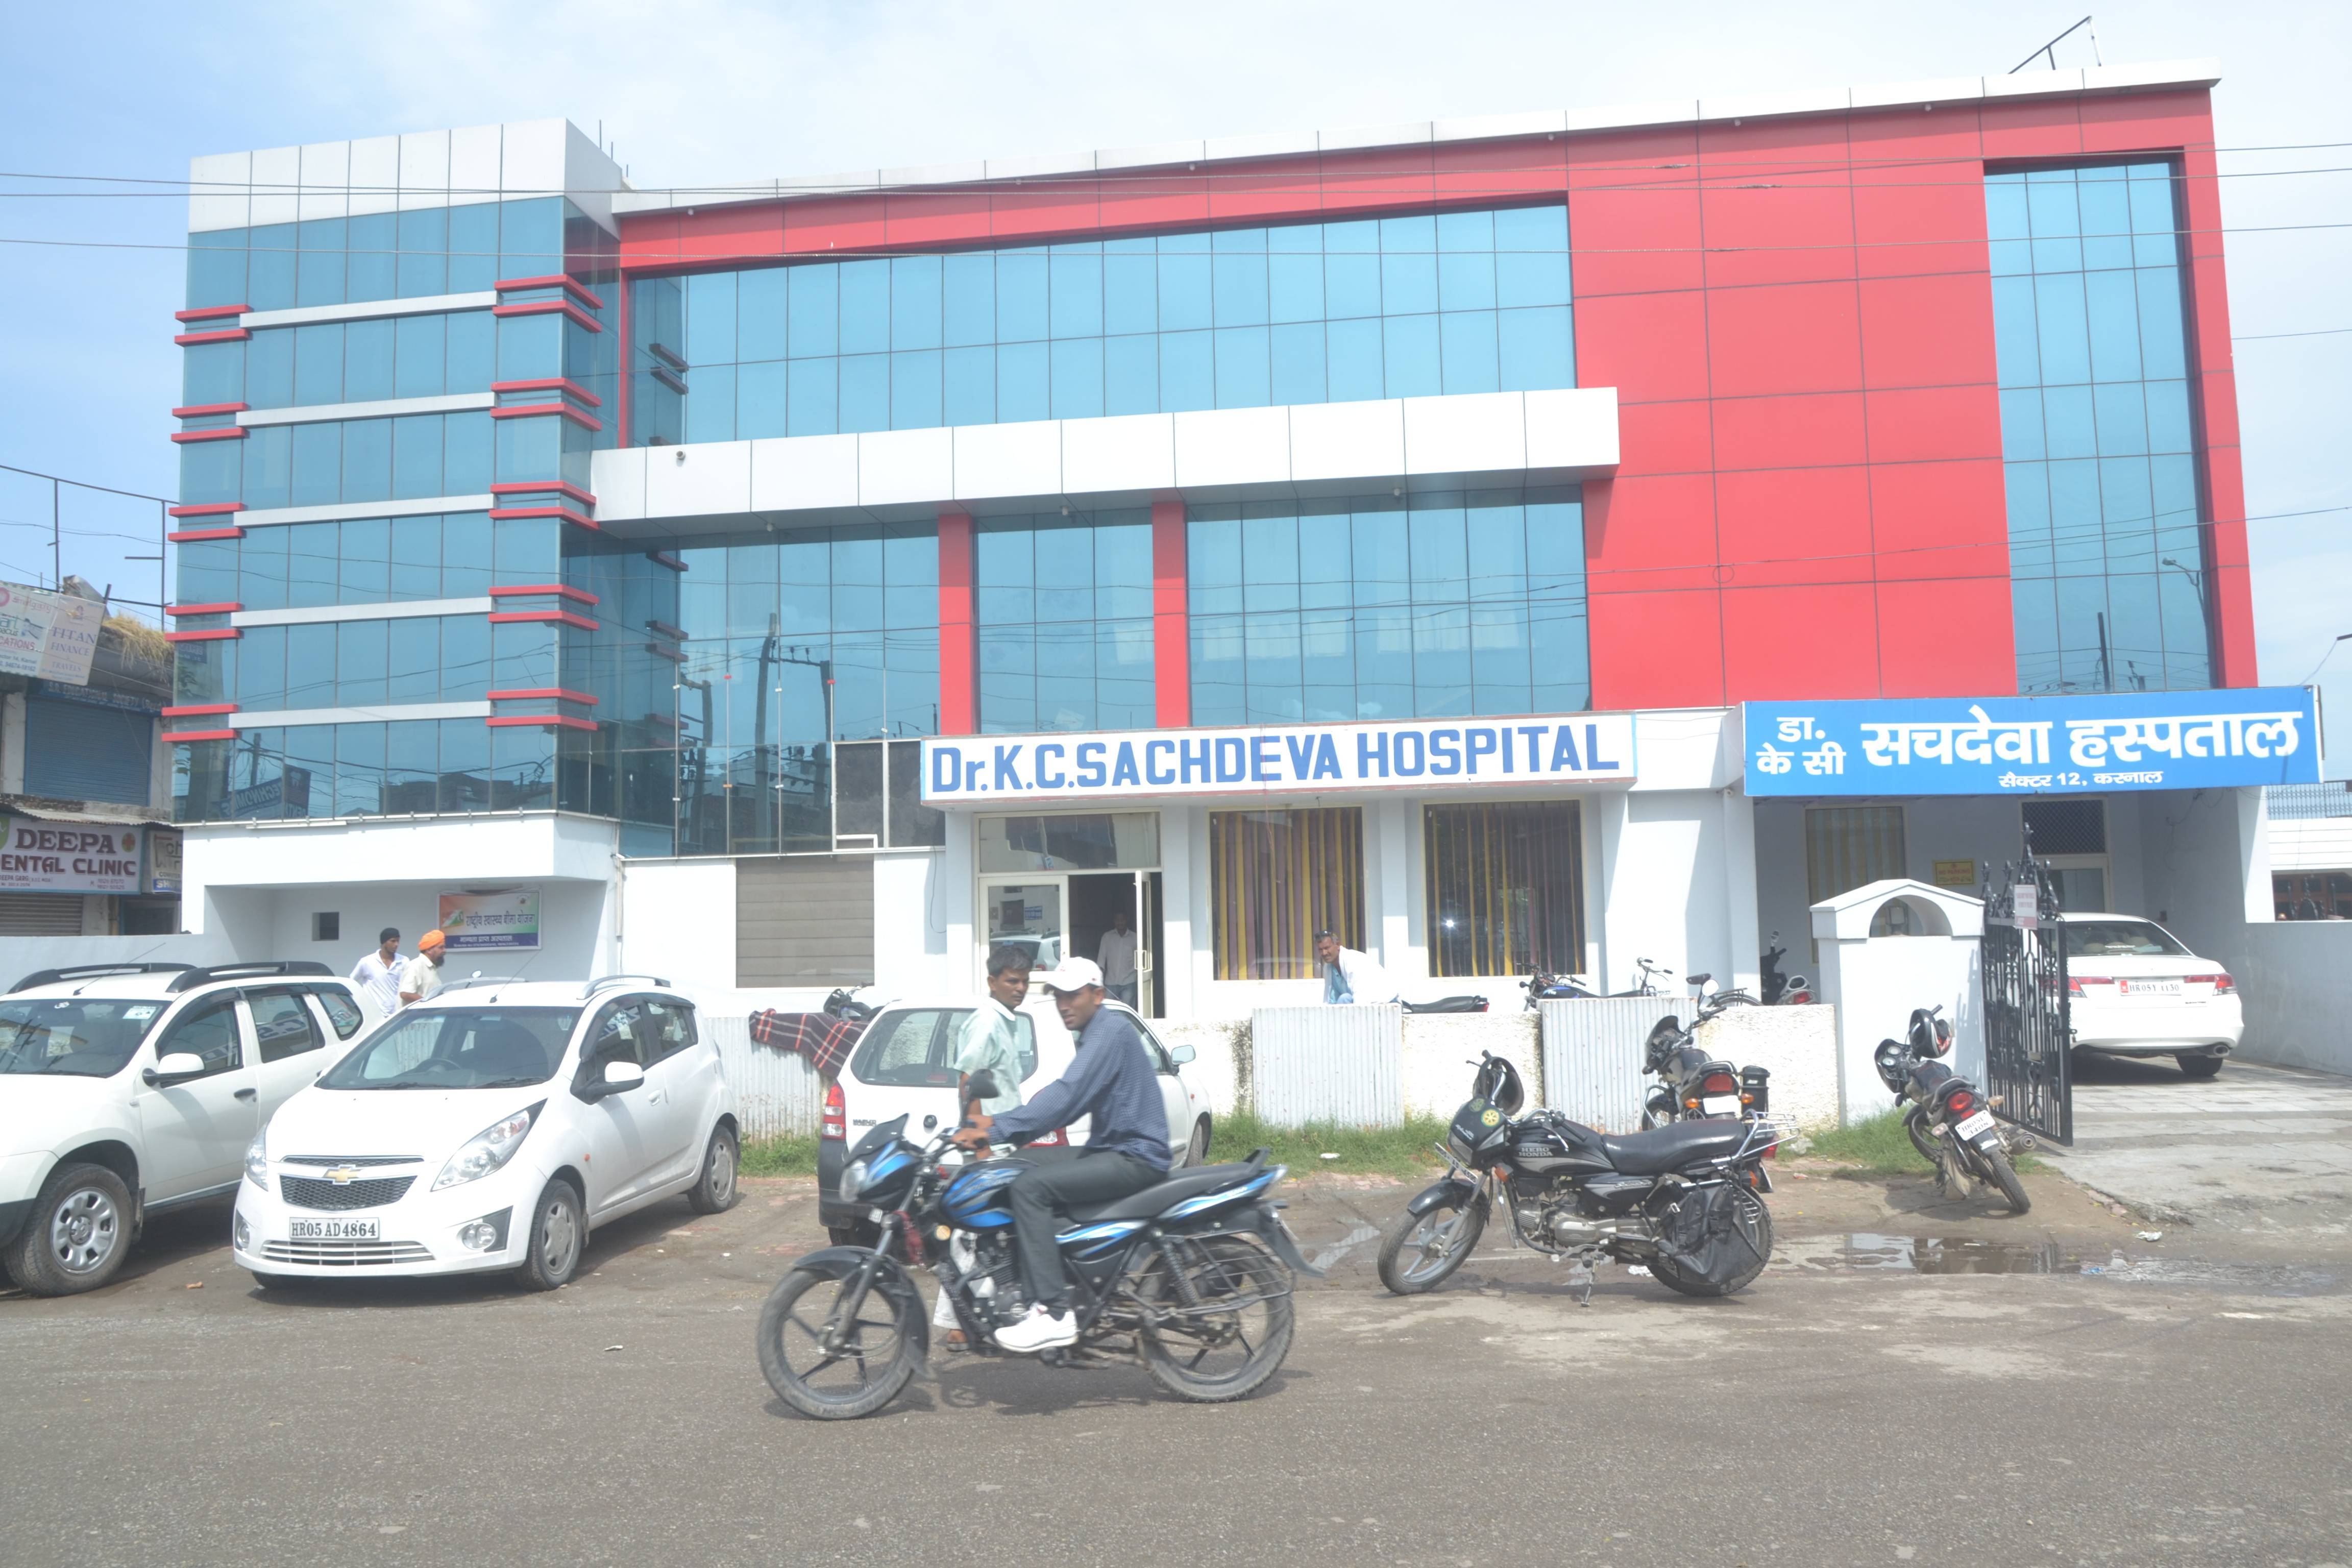 Dr. K C Sachdeva Hospital|Hospitals|Medical Services